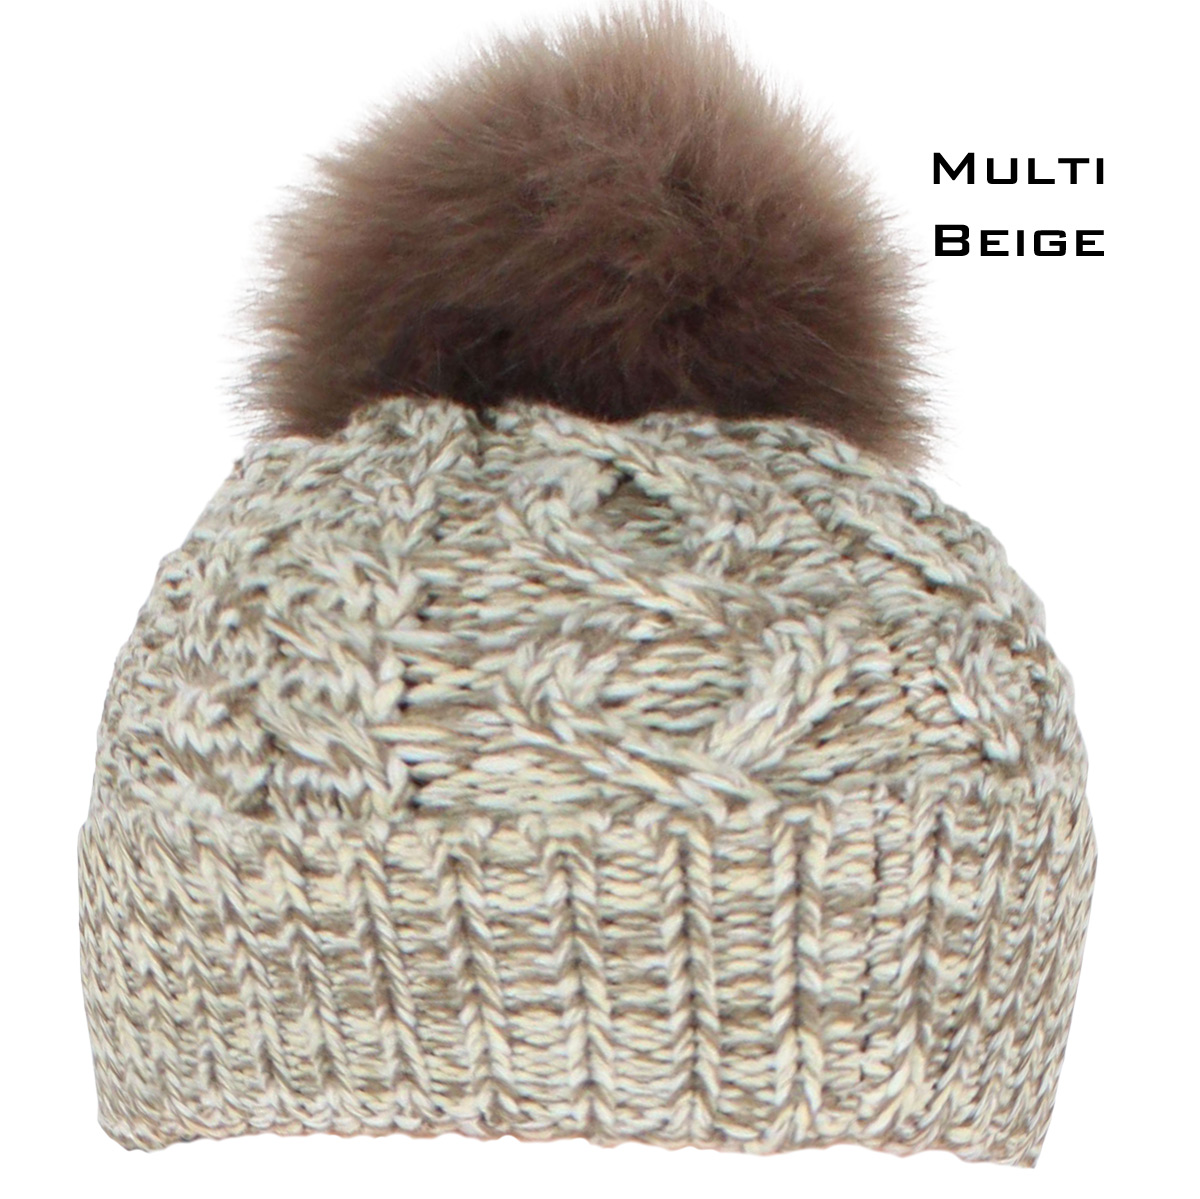 3114 - Winter Knit Hats 10026 LIGHT BLUE/FUR POM POM Knit Winter Hat - One Size Fits Most